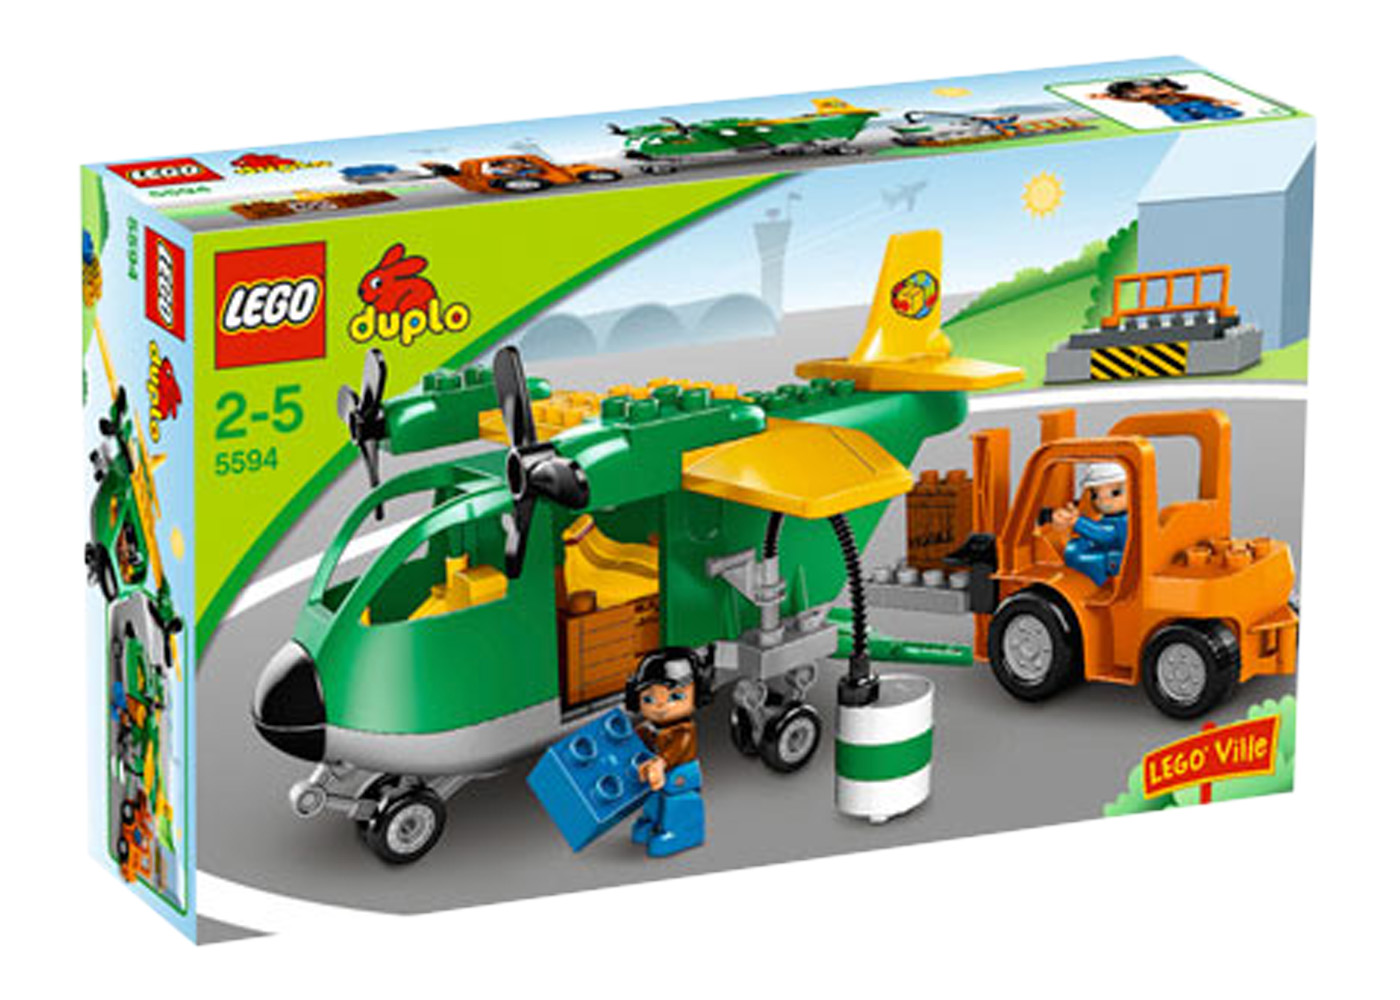 LEGO Duplo Chicken Coop Set 5644 - US